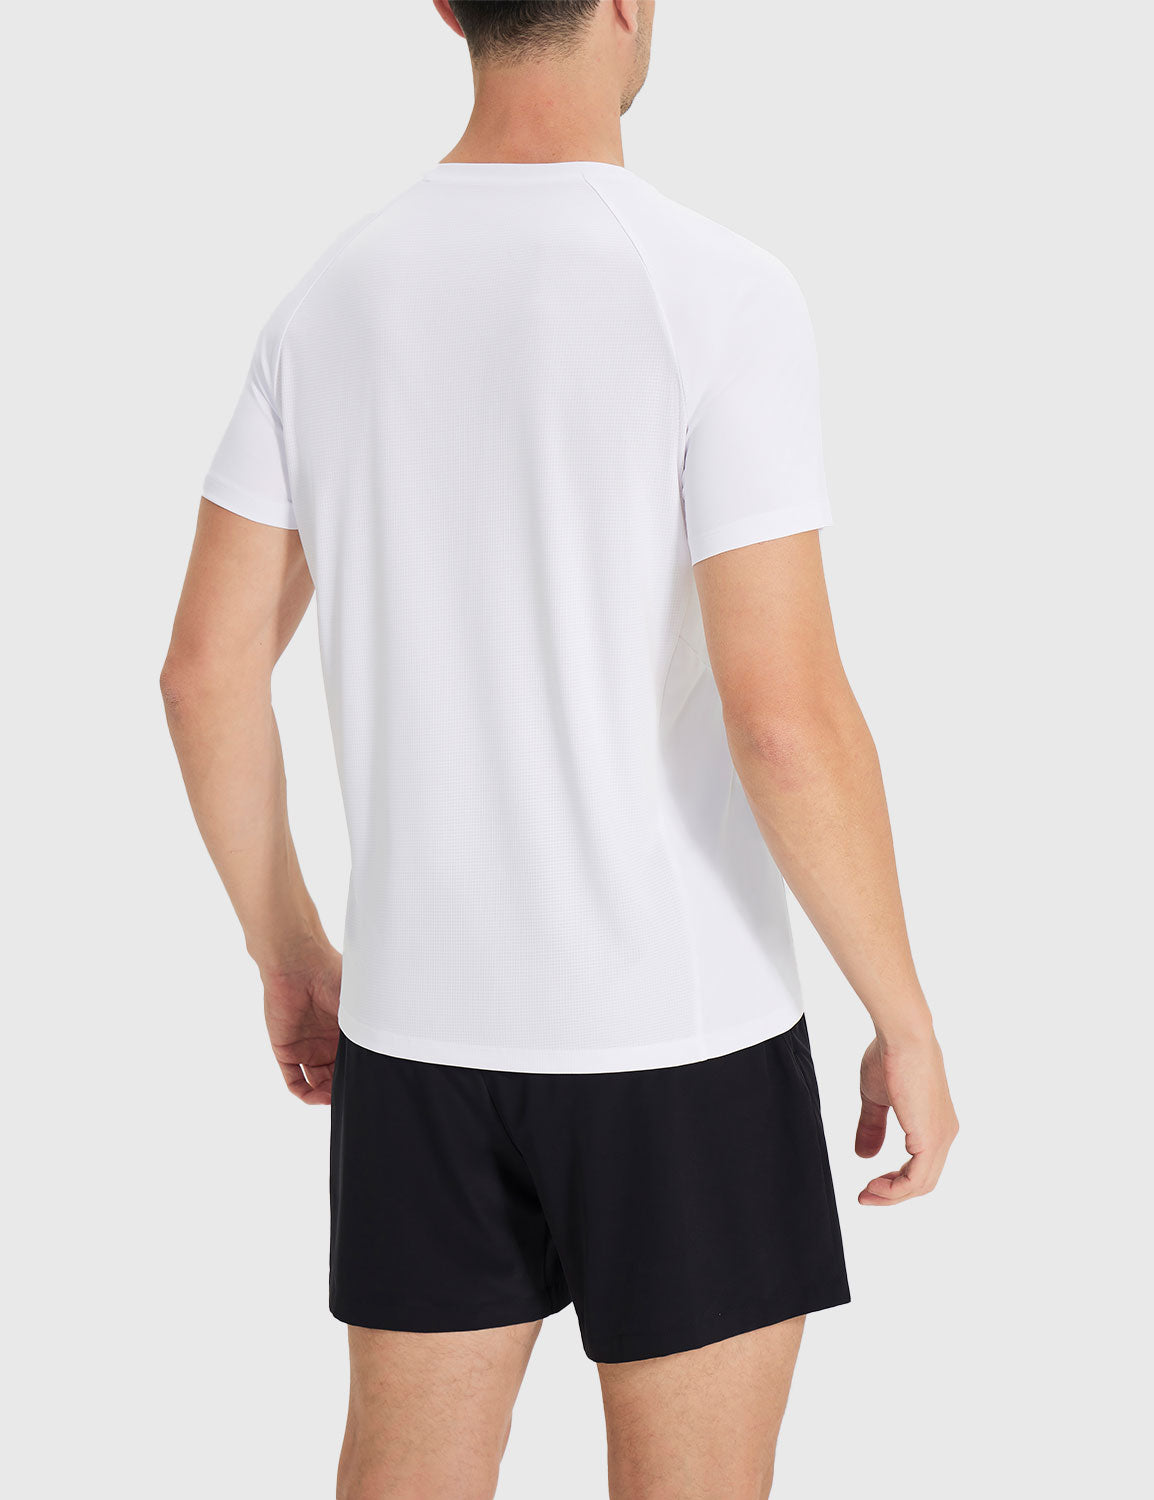 Baleaf Men's Quick Dry UPF 50+ Athletic T-shirts Lucent White Back